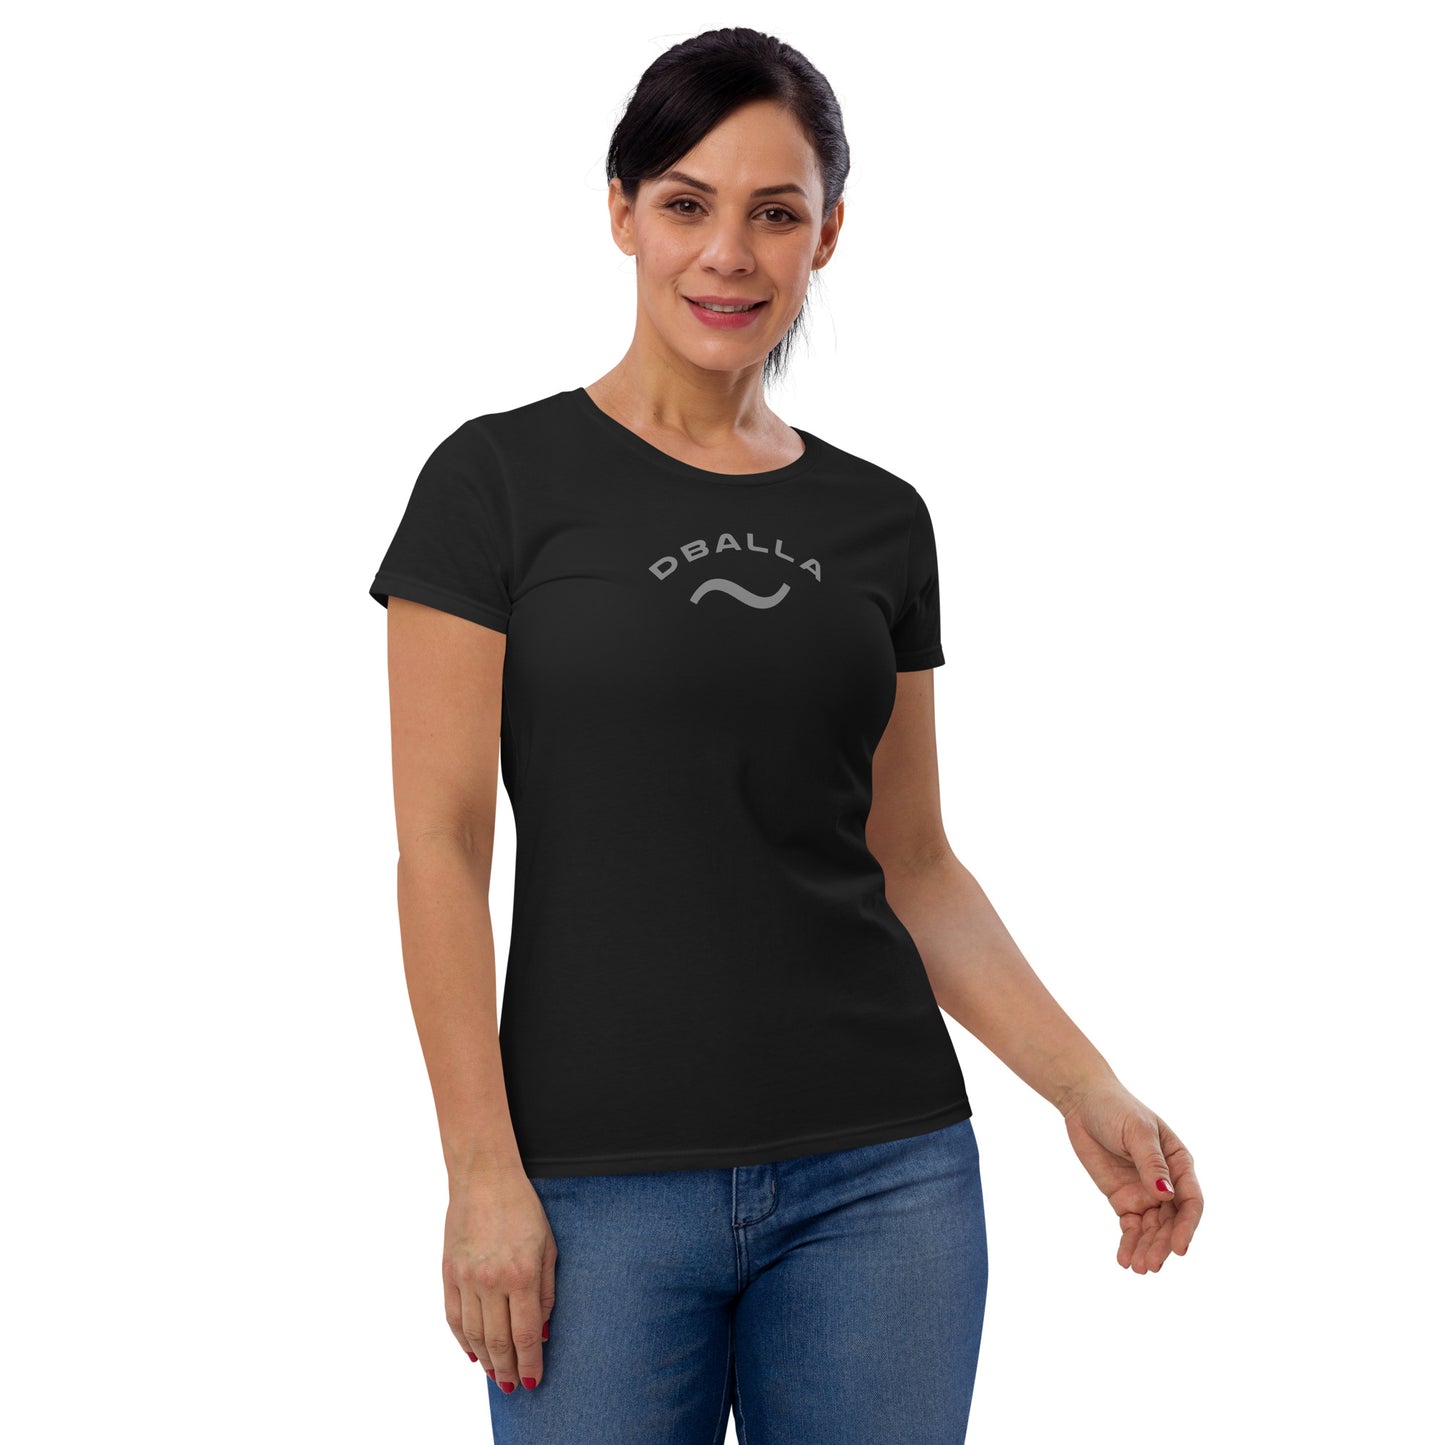 "LADY FITY" Women's short sleeve t-shirt